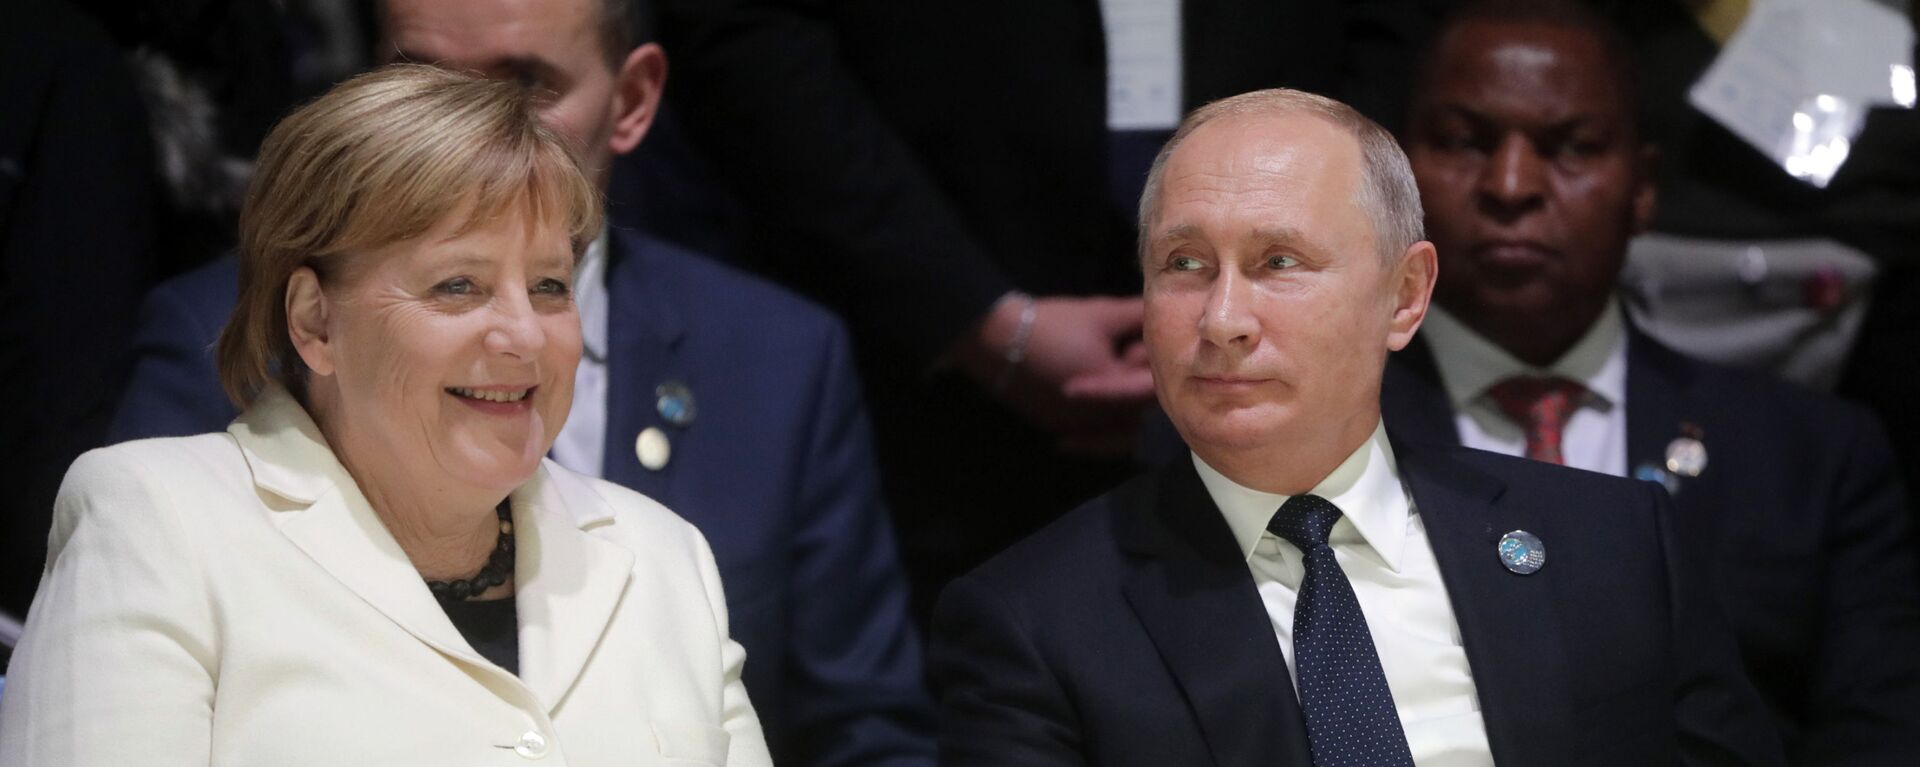 Putin și Merkel, la Forumul Păcii - Sputnik Молдова, 1920, 26.09.2021